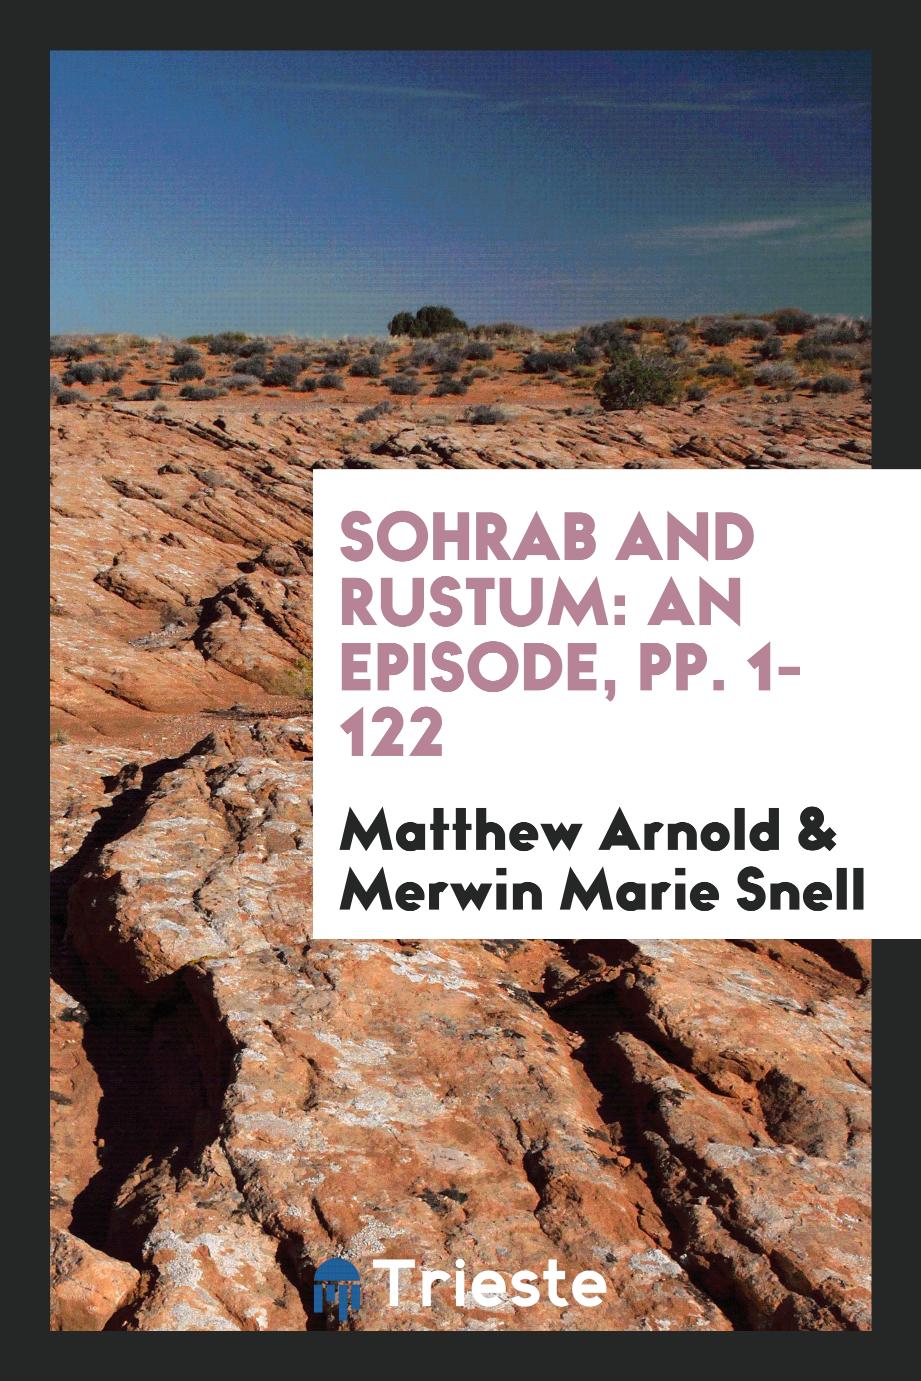 Sohrab and Rustum: An Episode, pp. 1-122